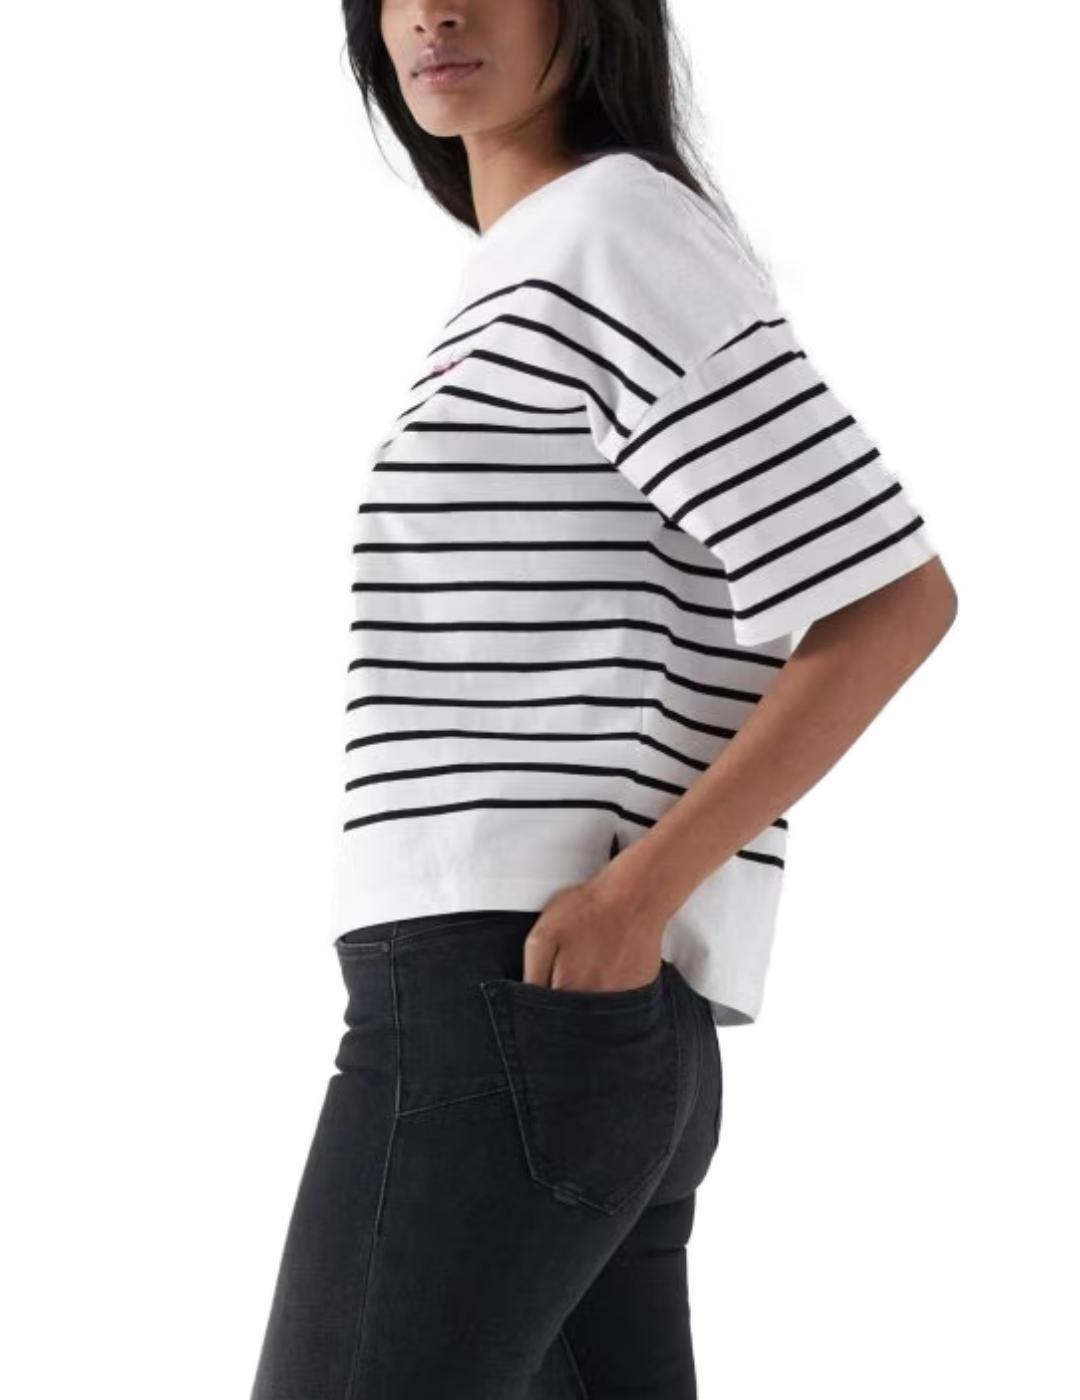 Camiseta Salsa rayas blanca azul manga corta de mujer